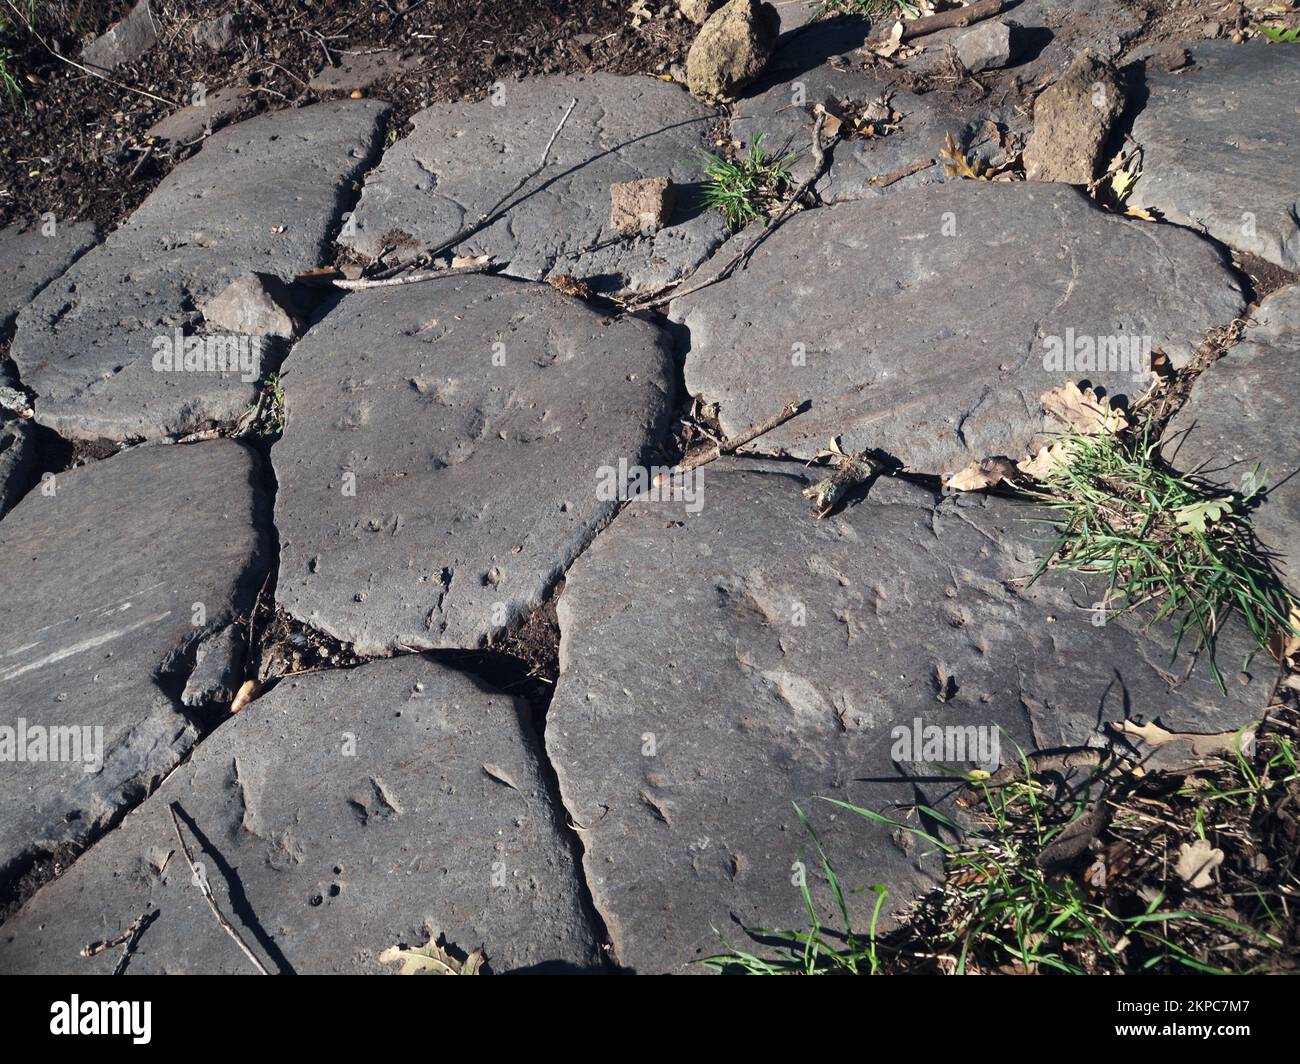 Ancient Roman age basalt stone slabs paved road Stock Photo